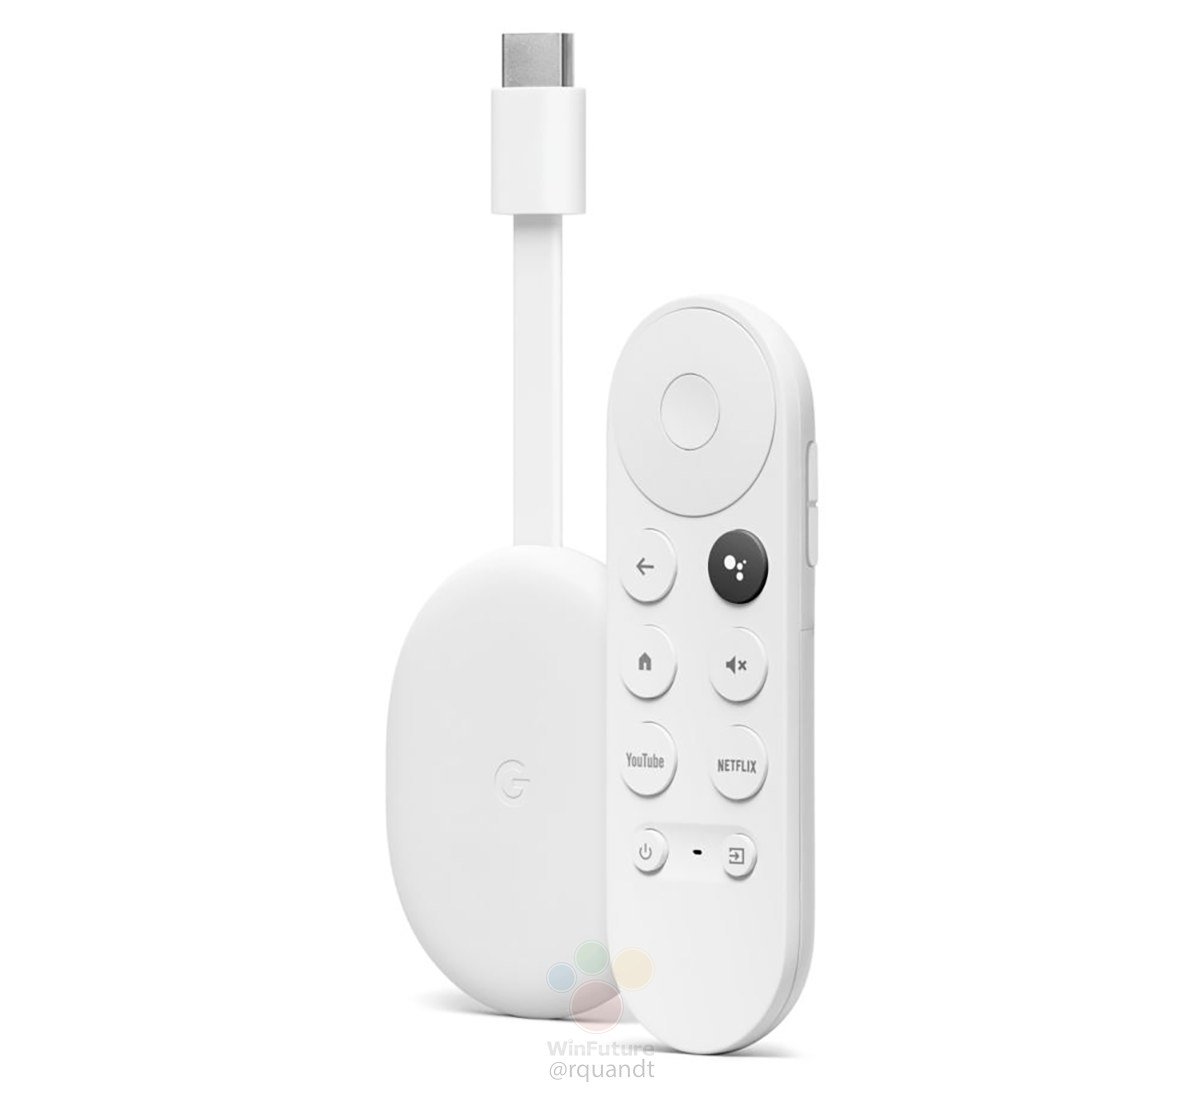 Google Chromecast with Google TV and Nest Audio smart speaker leak again before launch